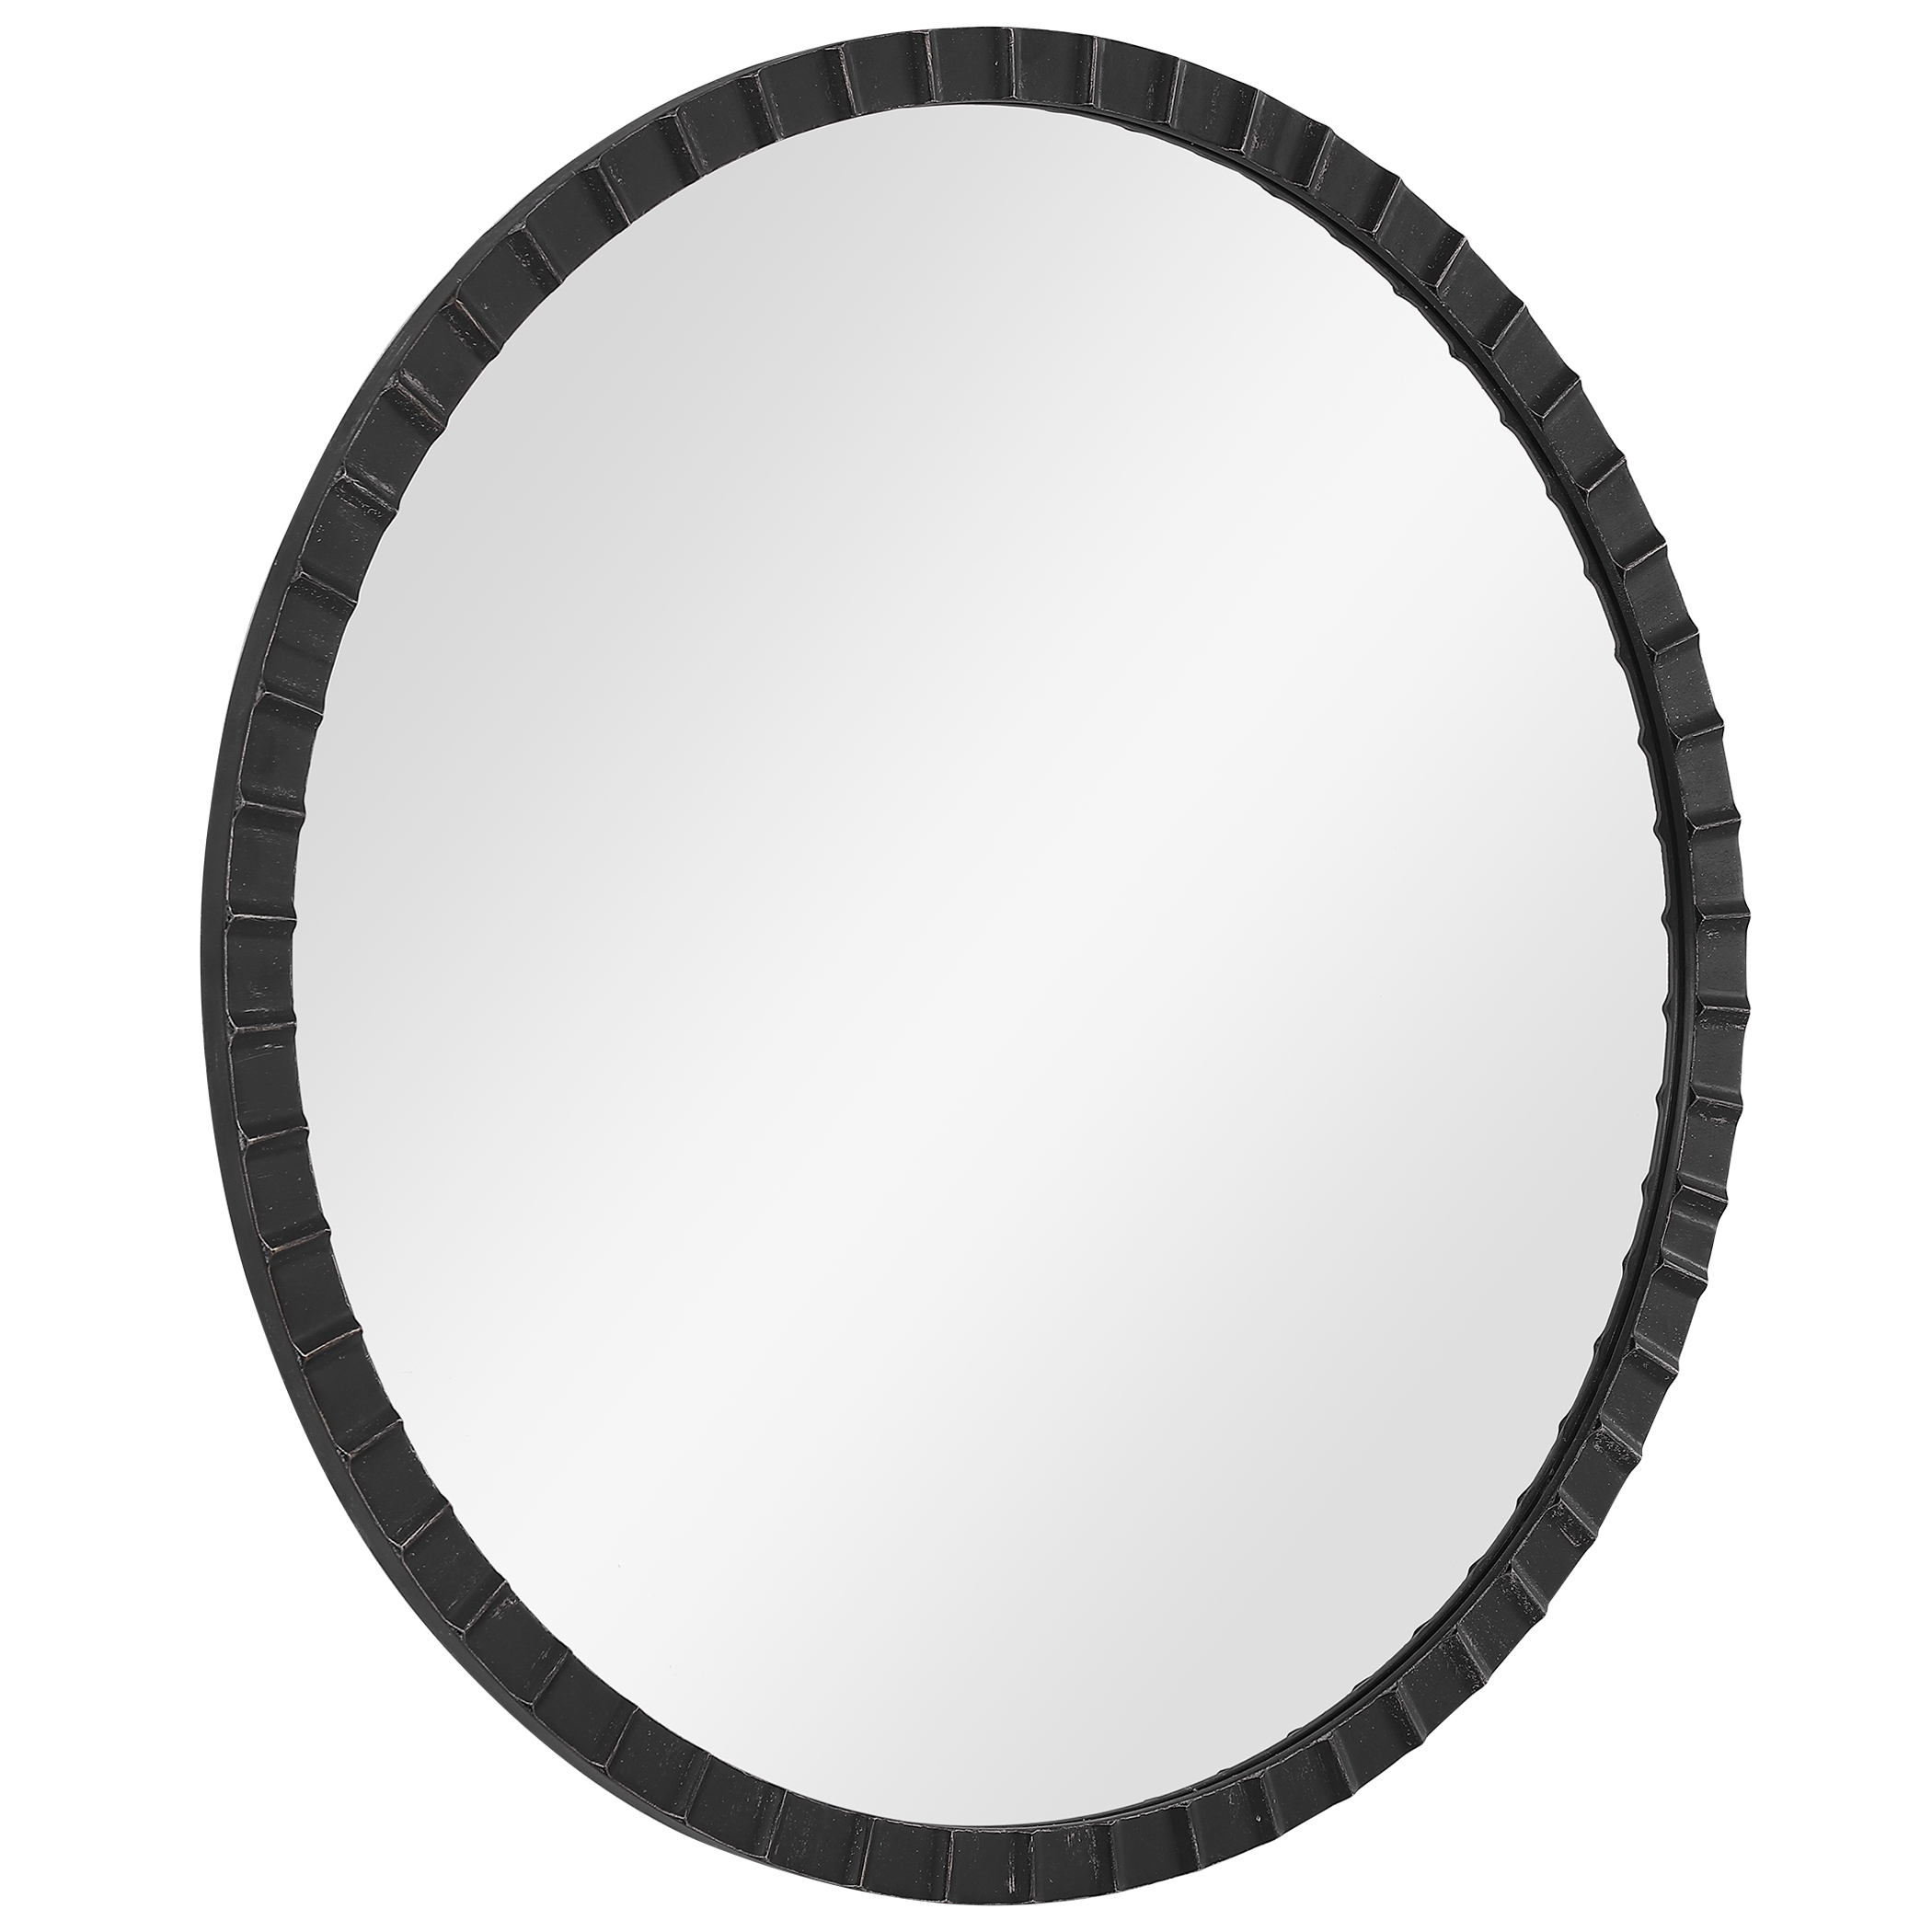 Dandridge Round Industrial Mirror, 34" - Image 1